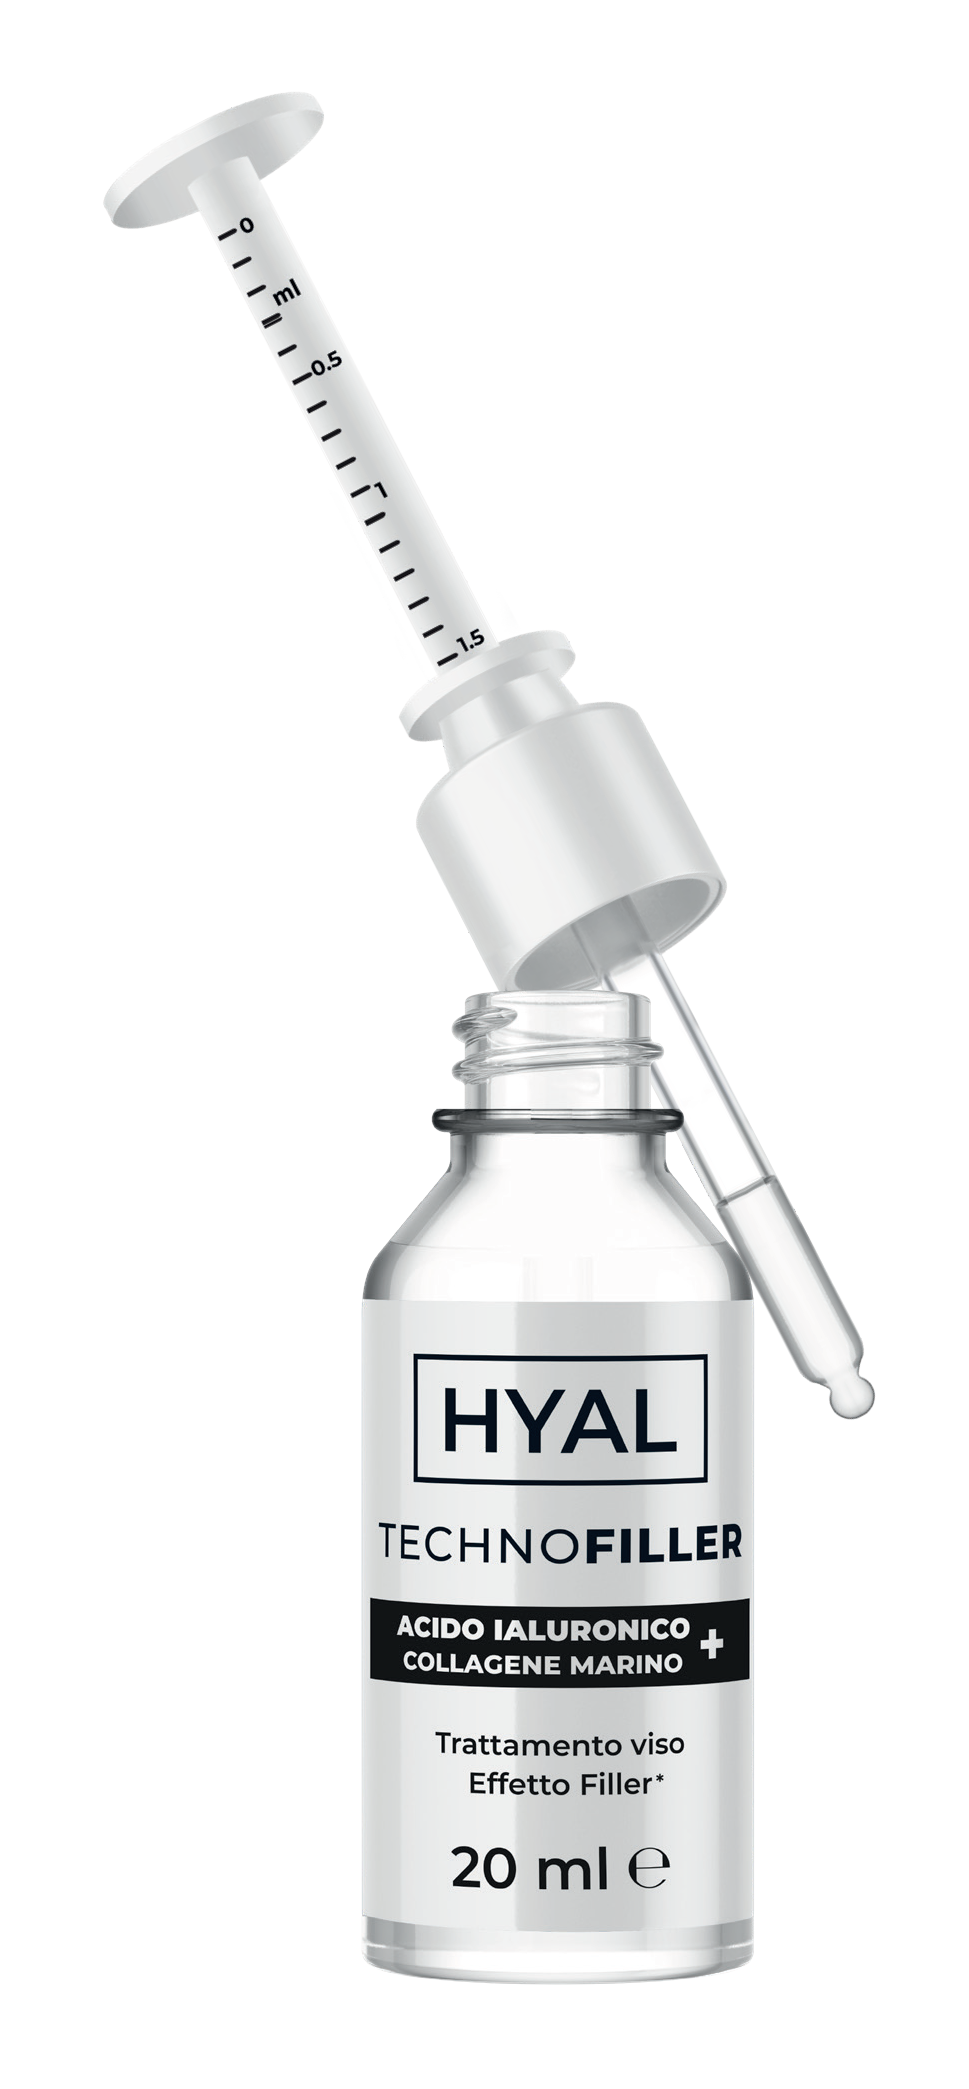 Con Hyal Technofiller effetto filler senza aghi